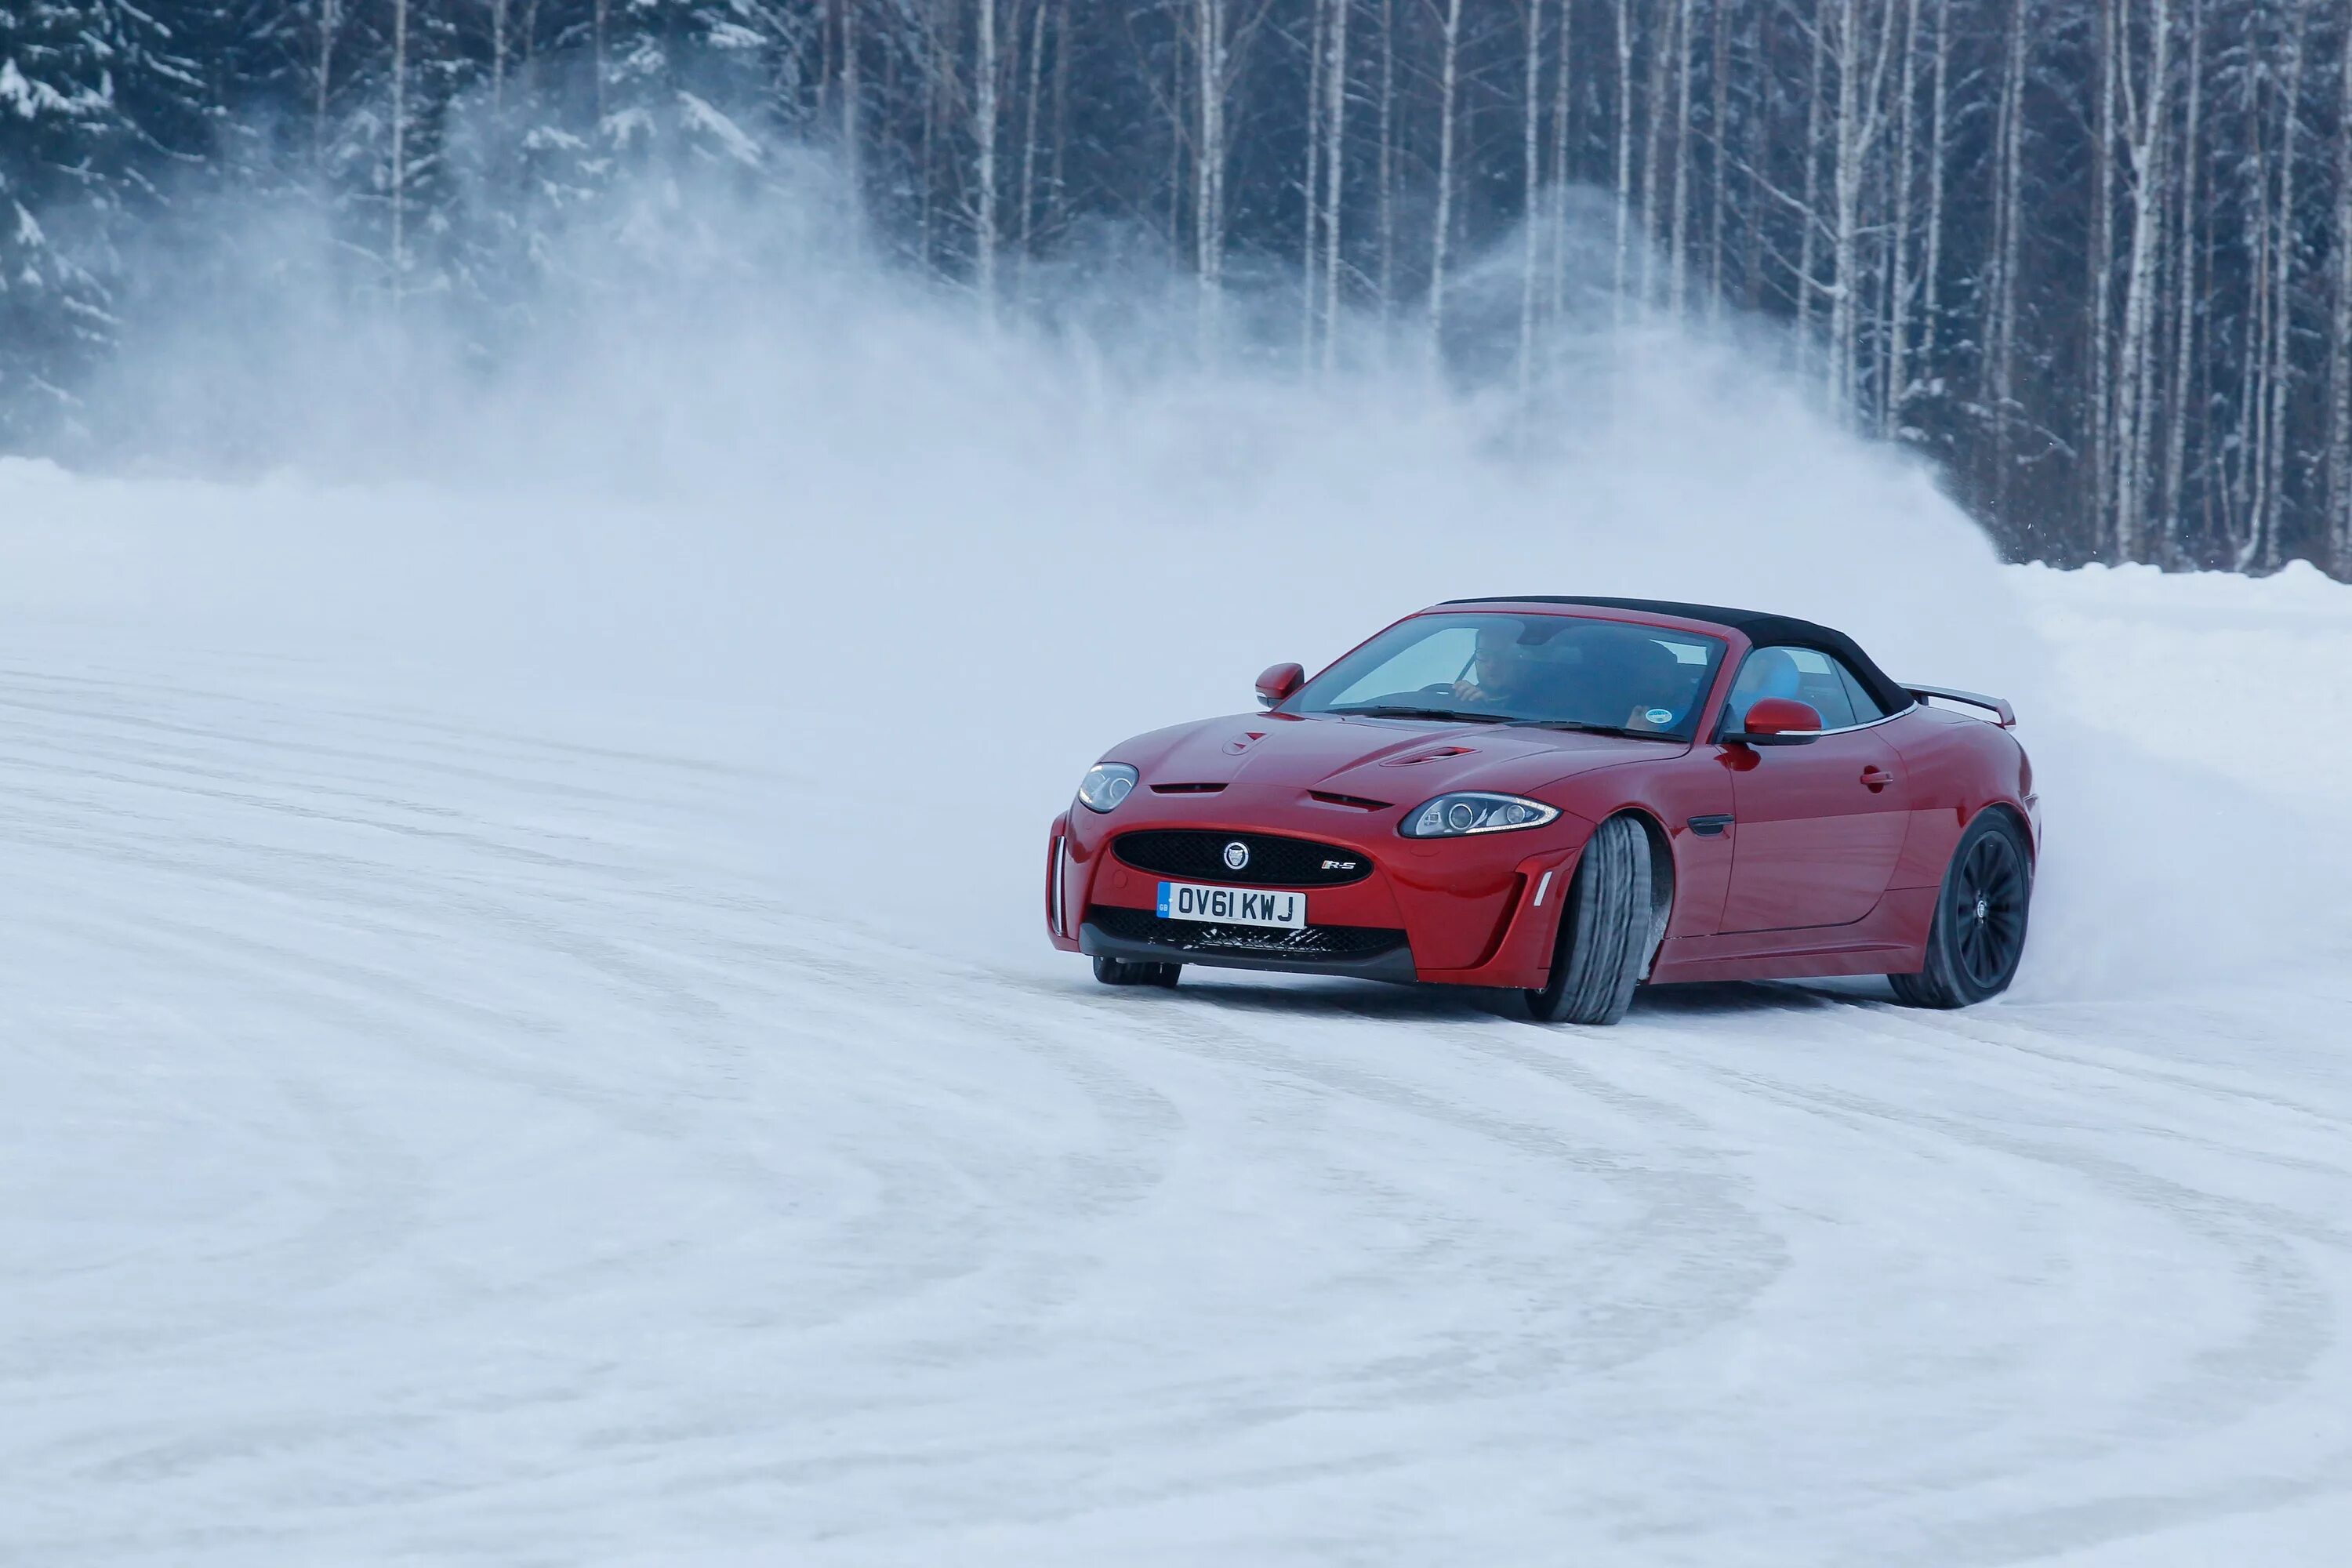 Drifting snow. Ягуар машина дрифт. Машина зимой. Машина в снегу. Машина дрифт в снегу.